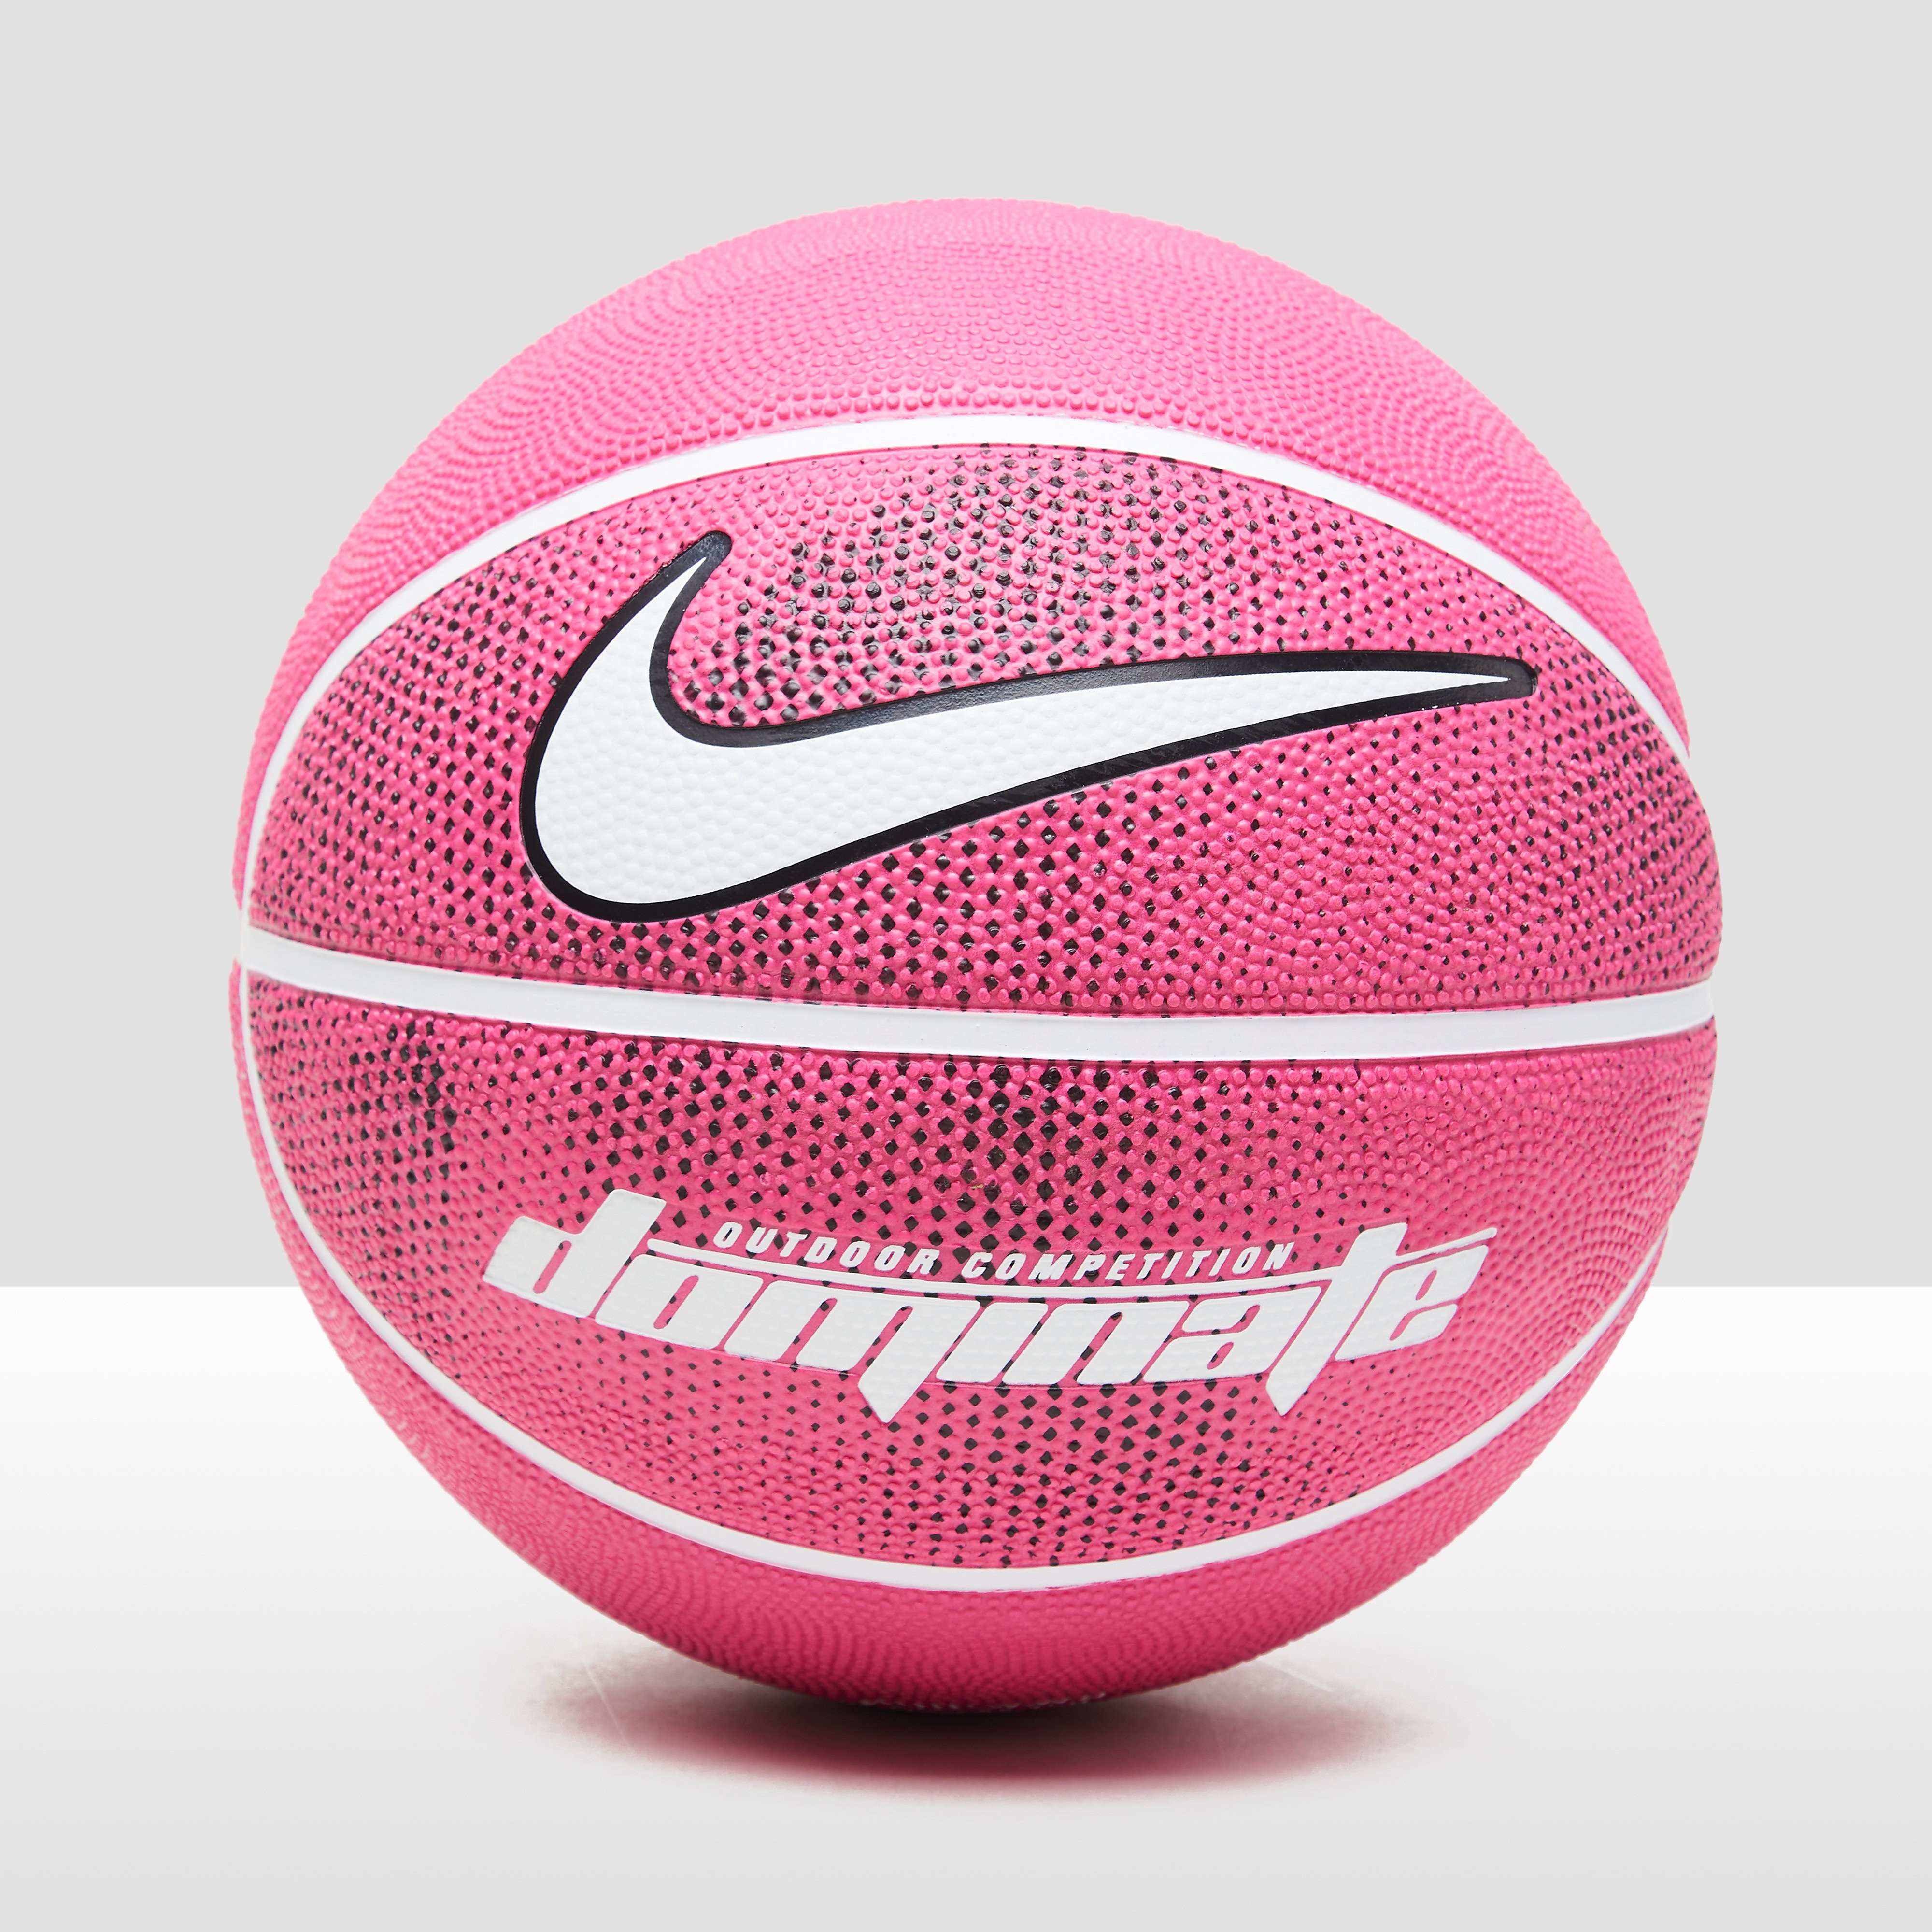 NIKE Dominate 8p basketbal roze/wit Dames